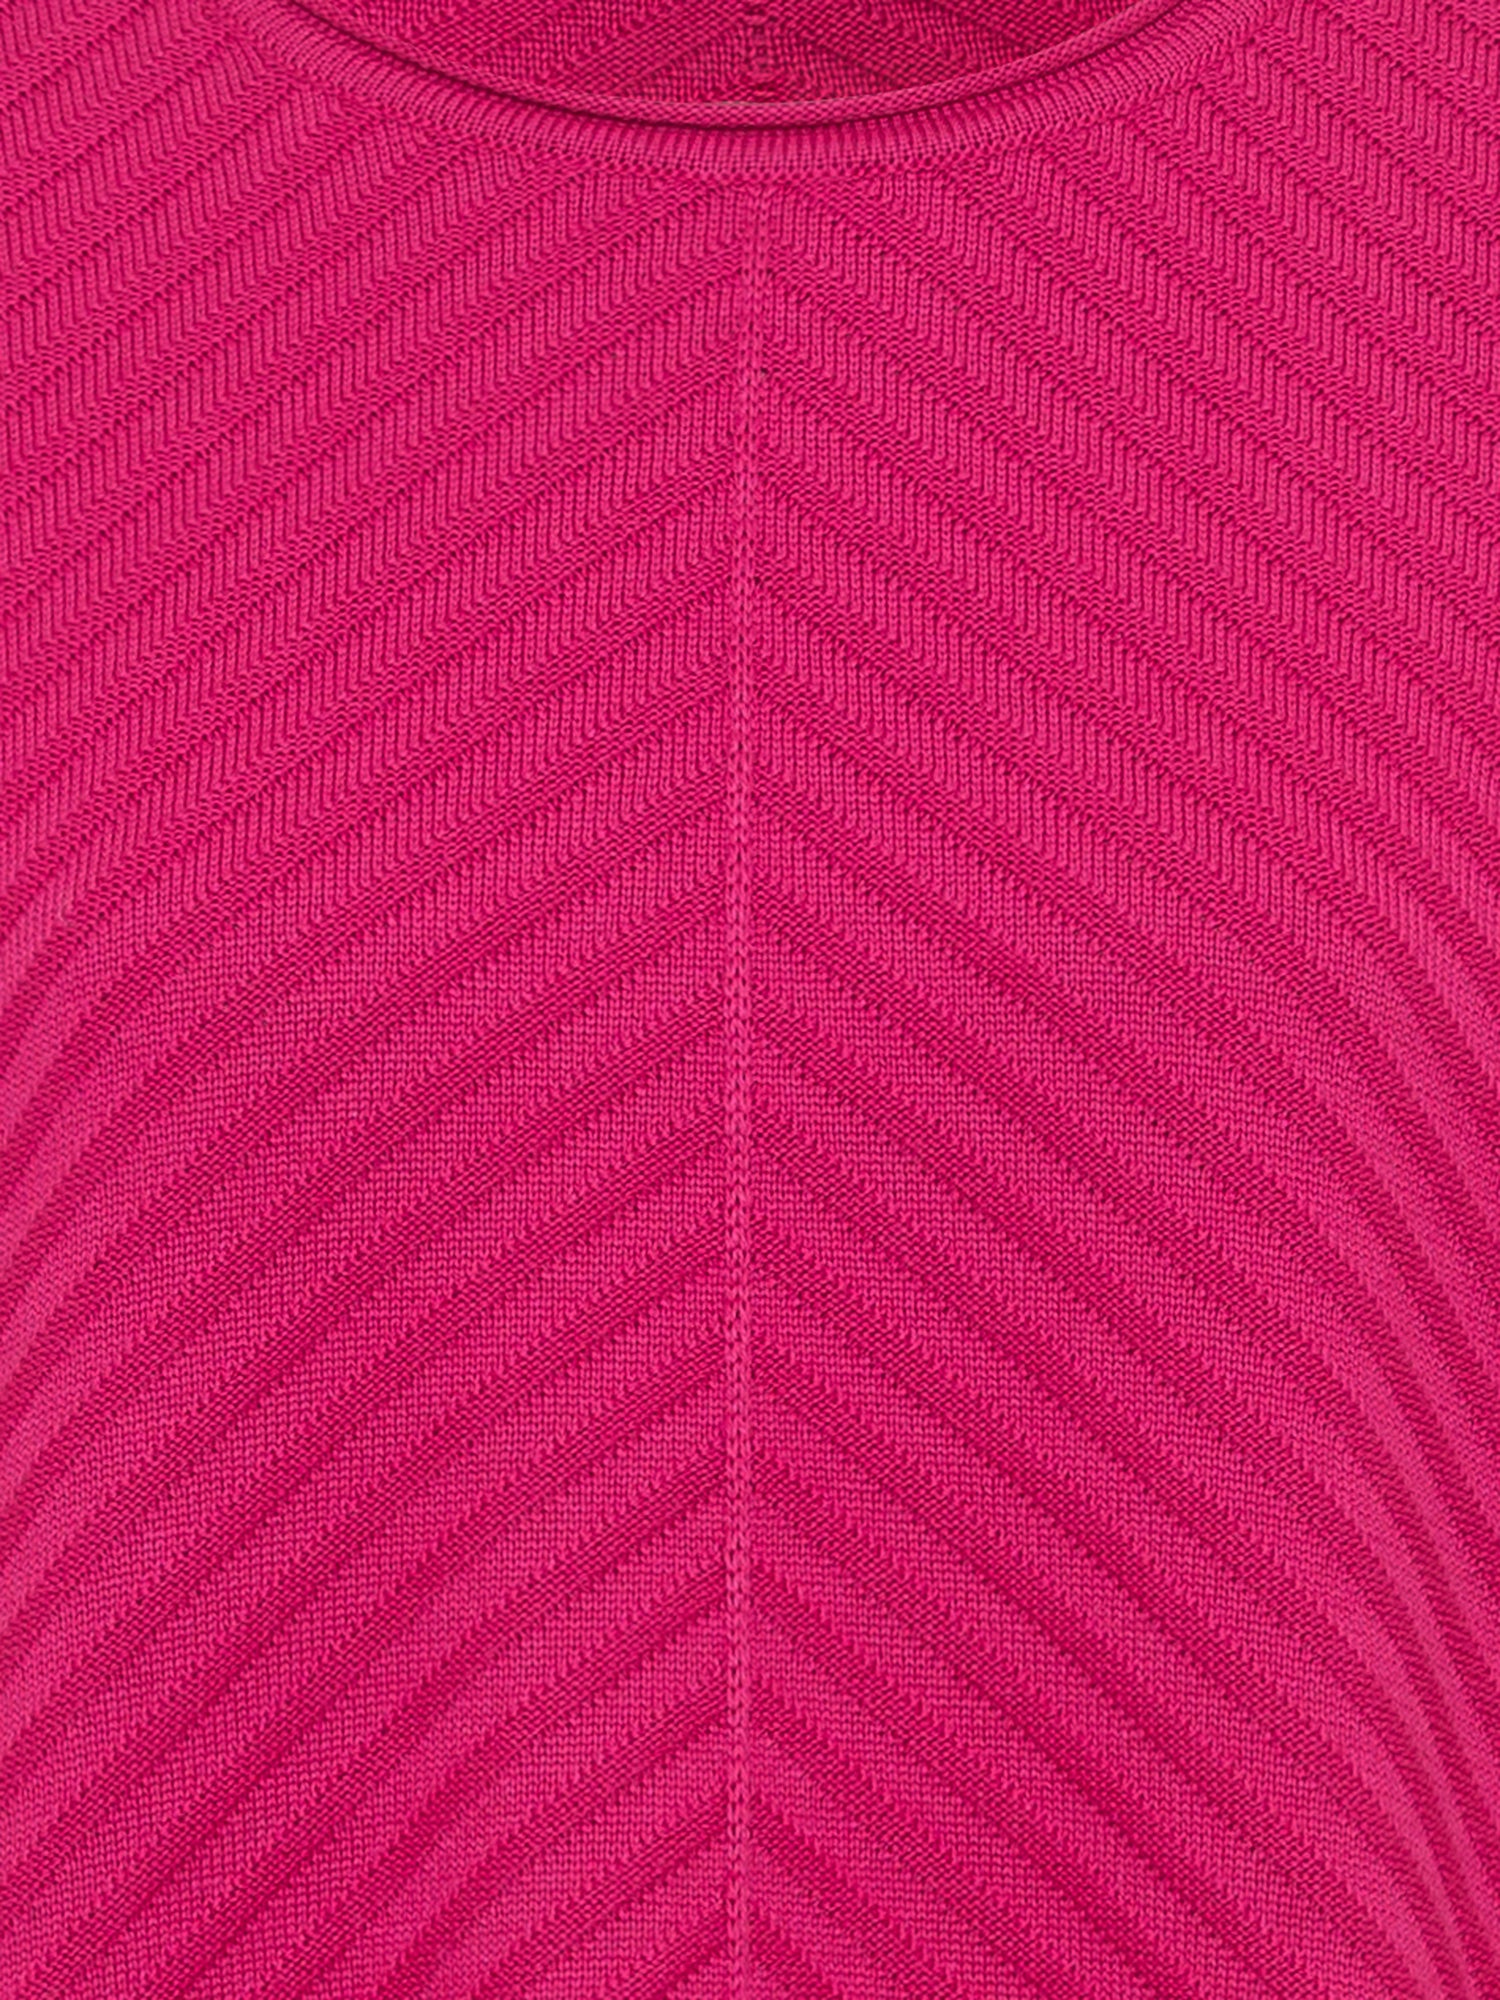 Olsen -Vivid Hot Pink Knit